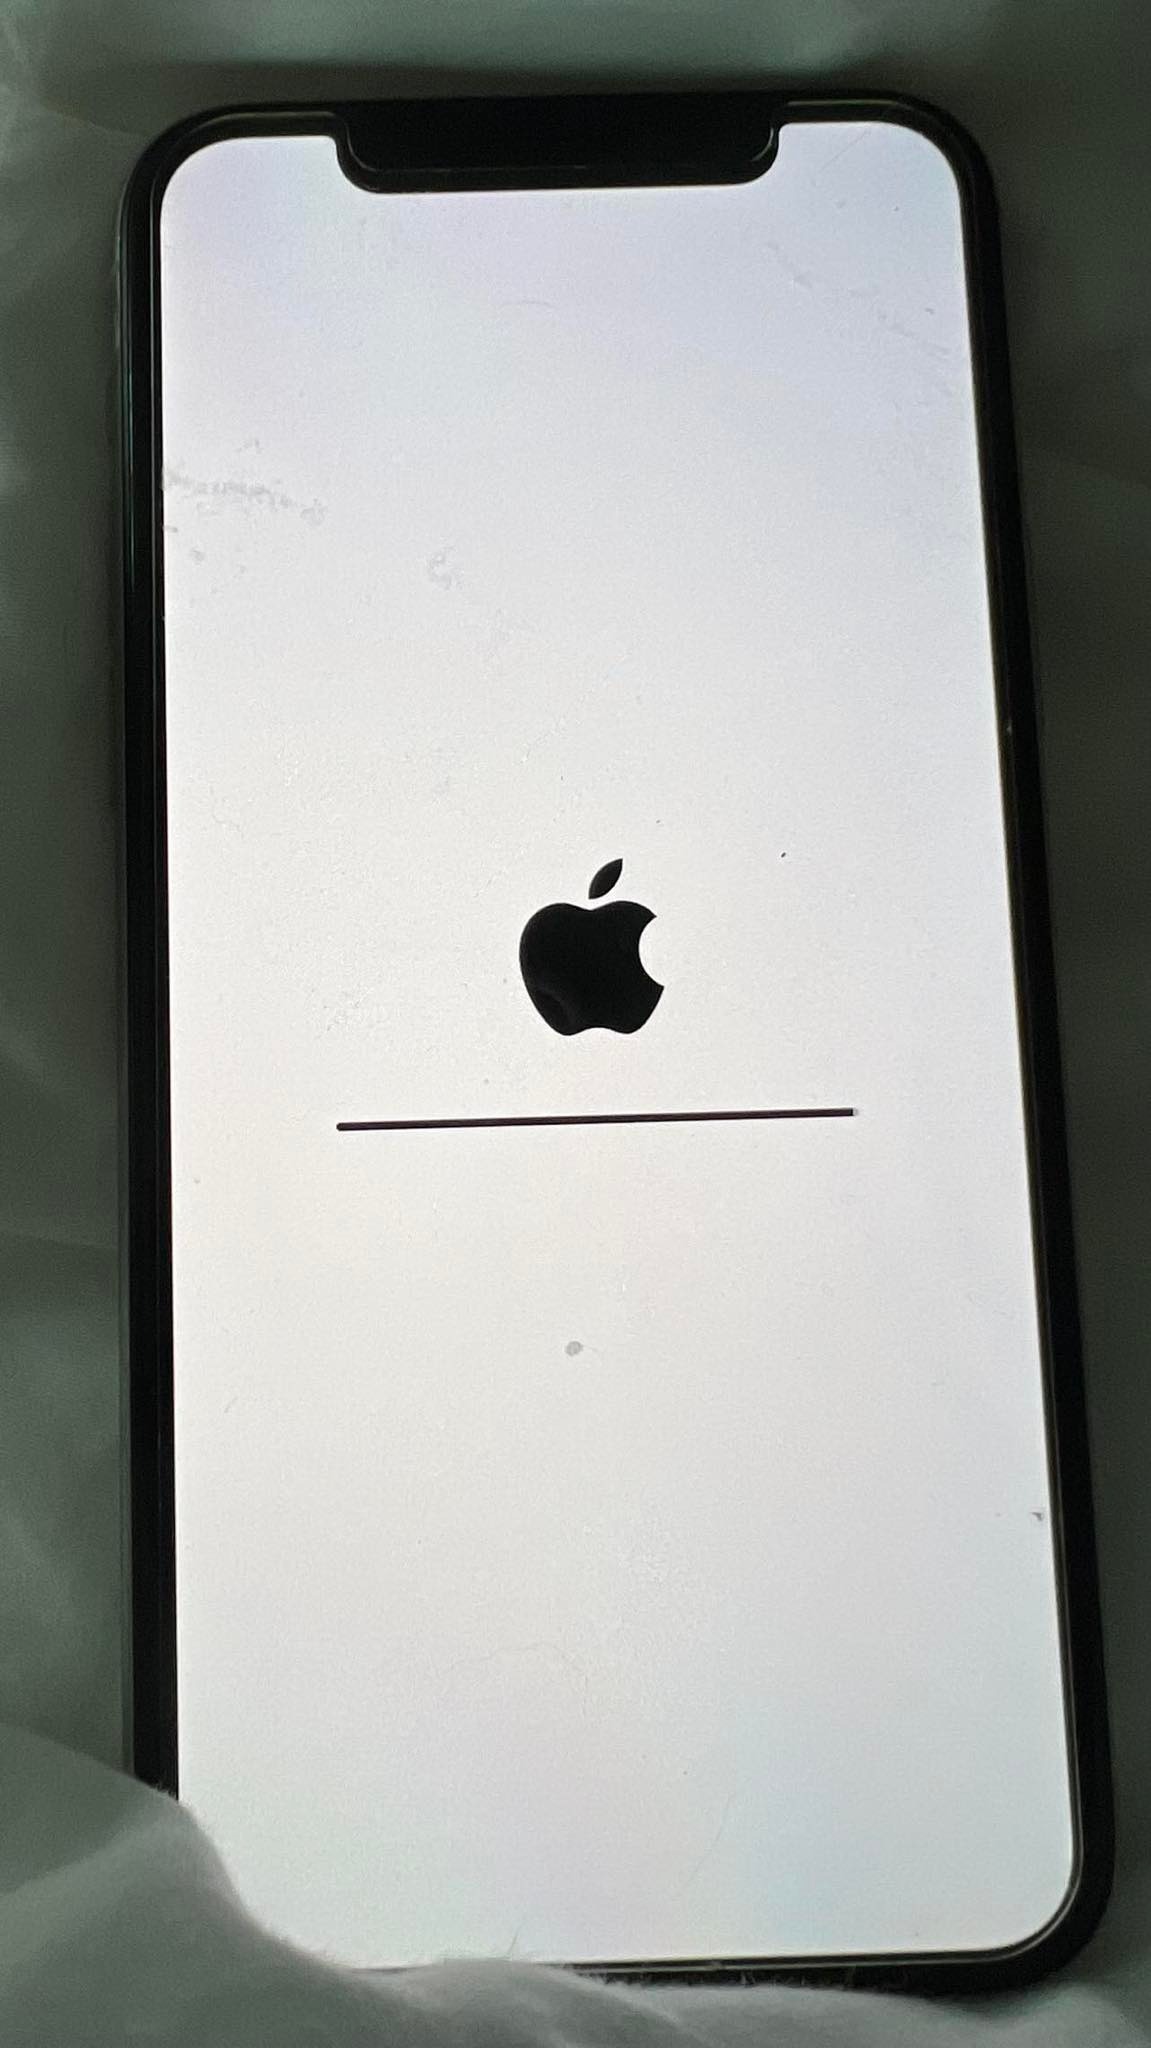 iOS 16 stuck on progress bar for 48 hrs. - Apple Community